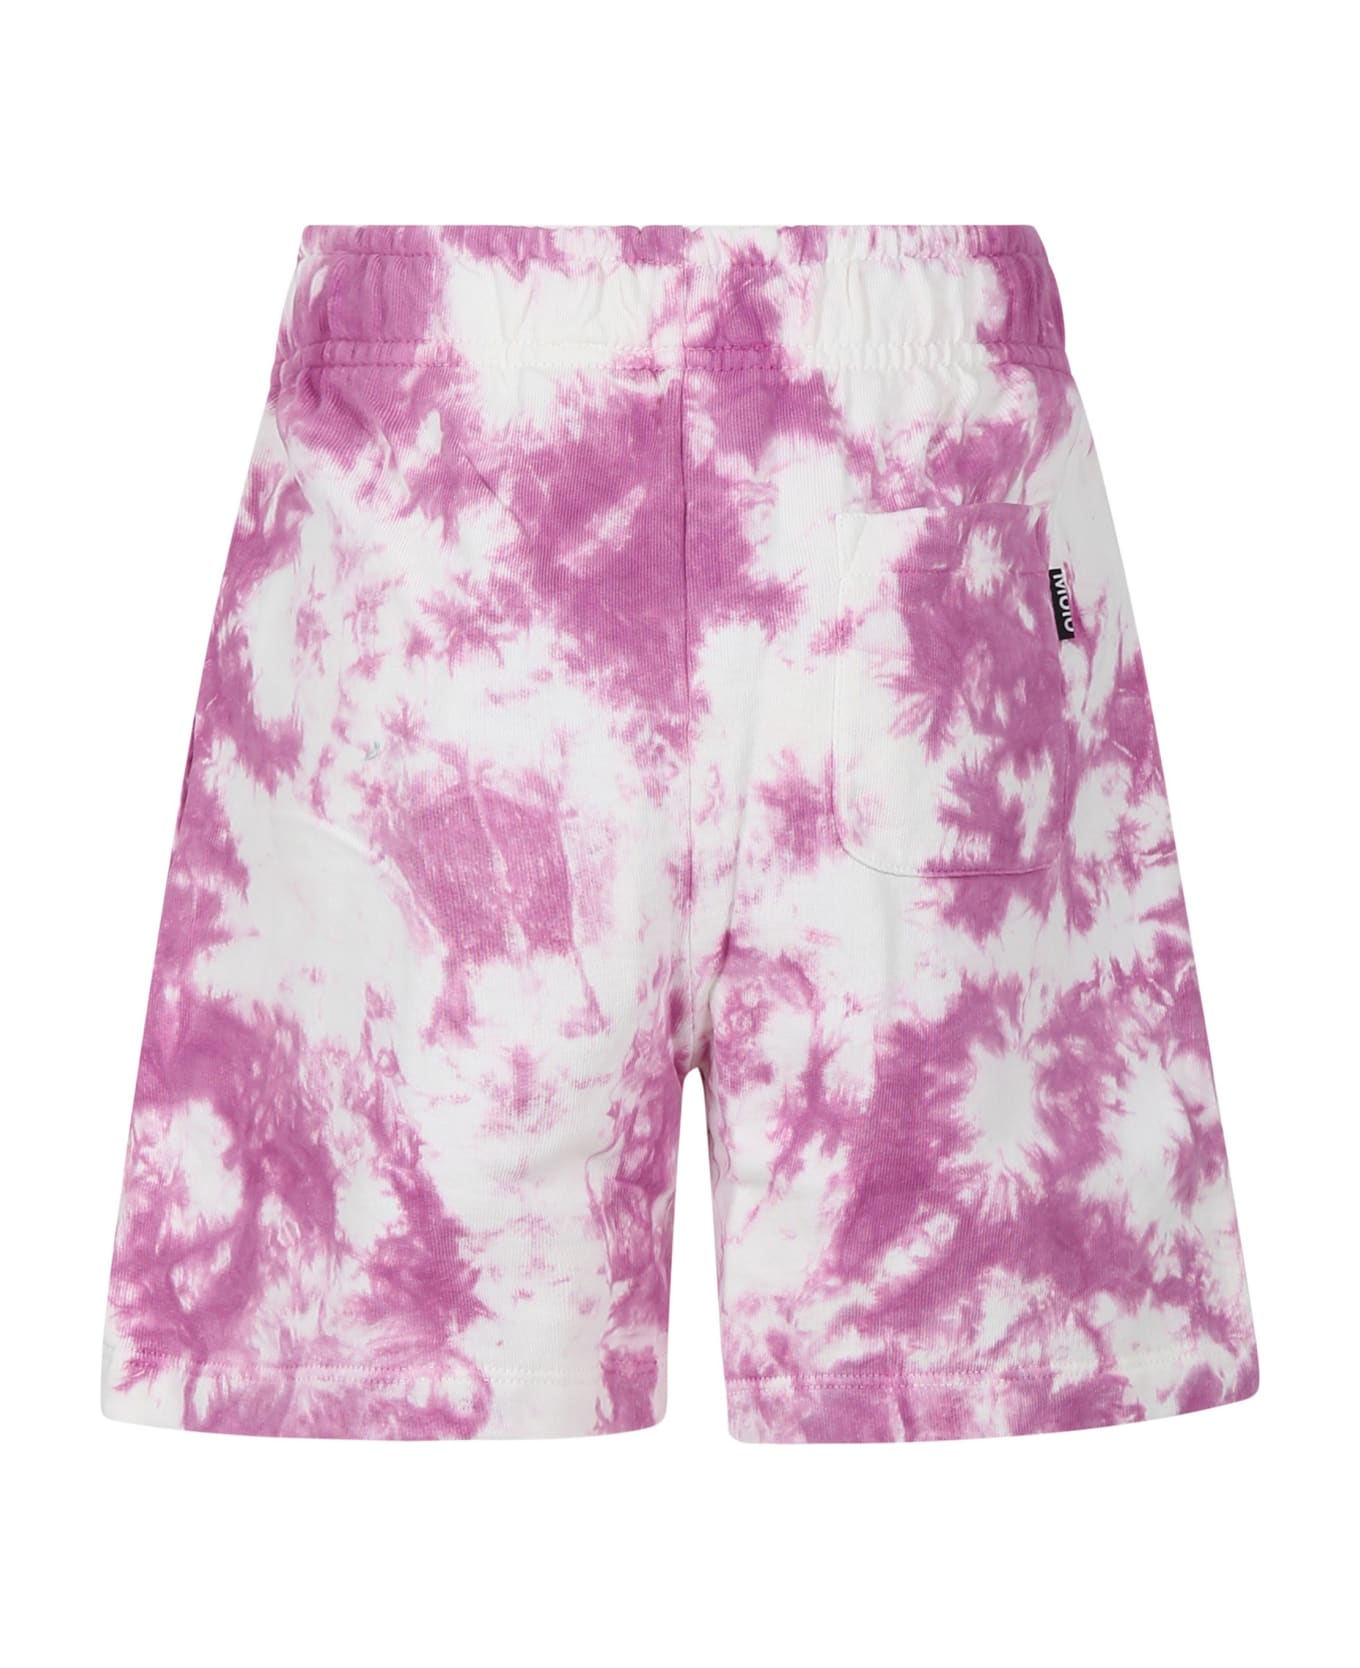 Molo Fuchsia Sports Shorts For Girl With Tie Dye - Fuchsia